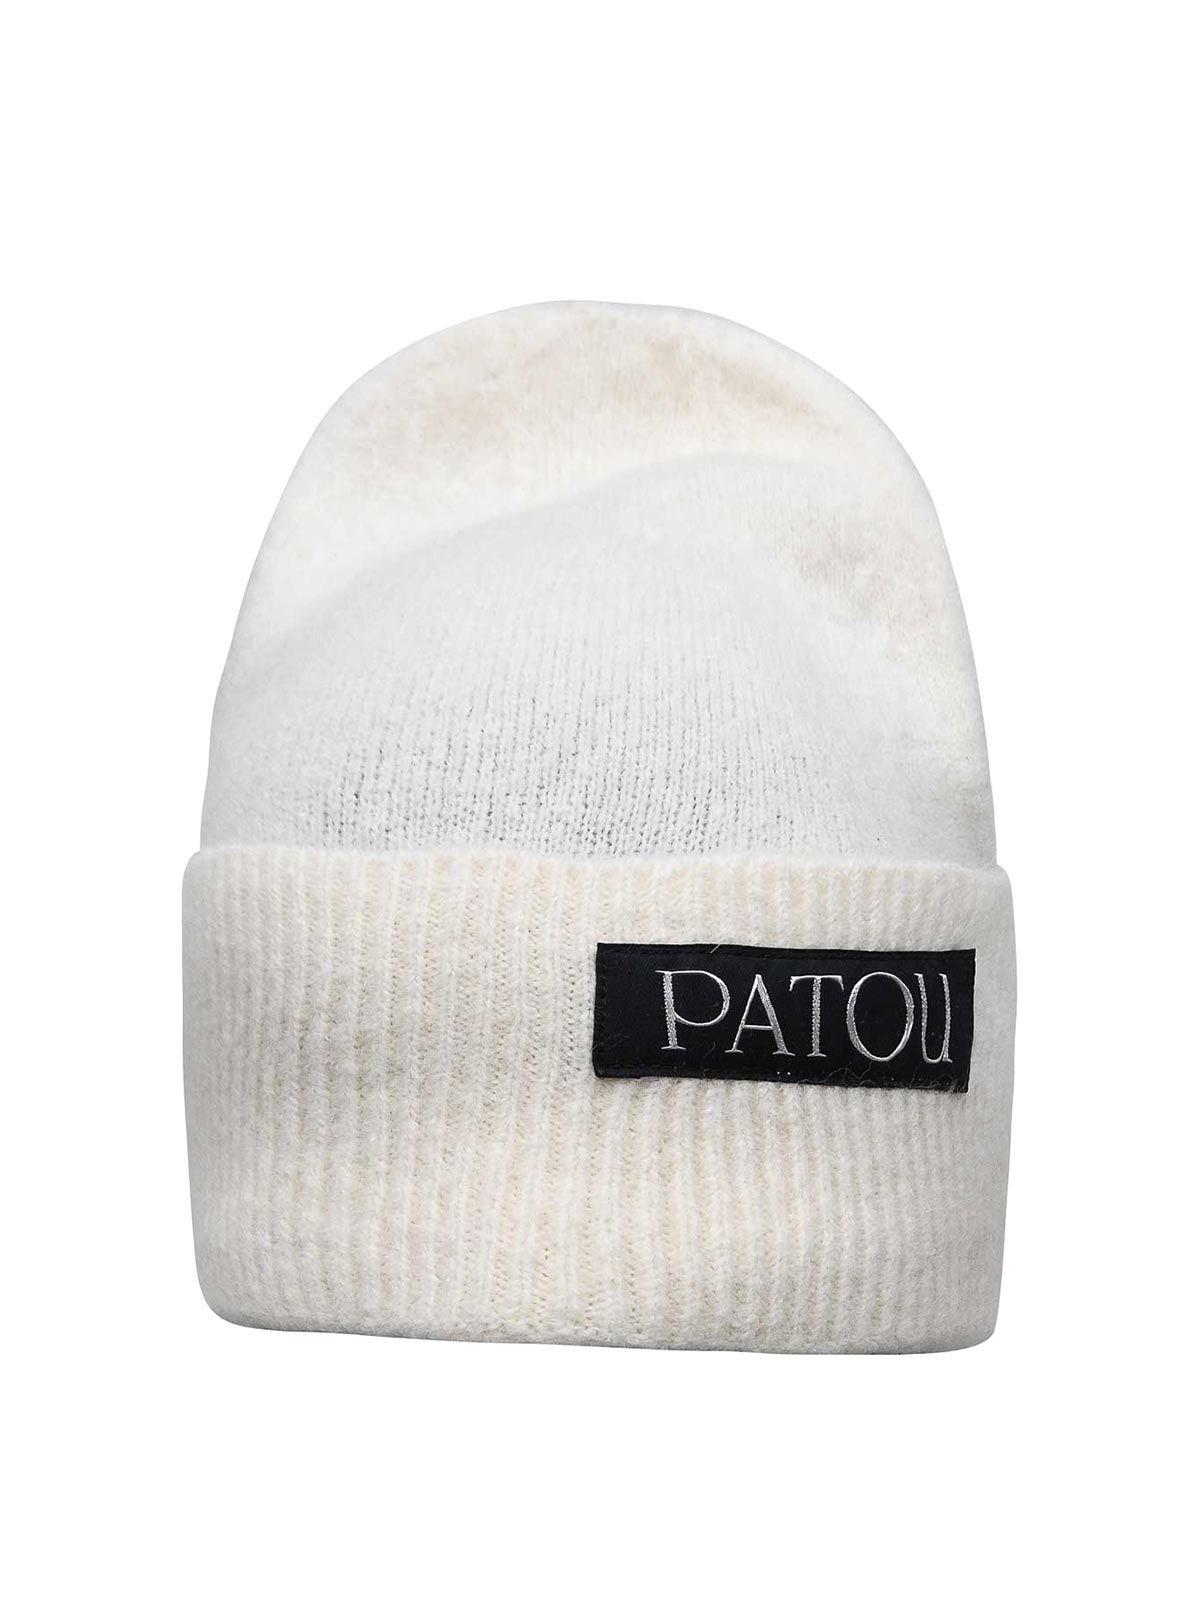 Patou Logo Cap In White